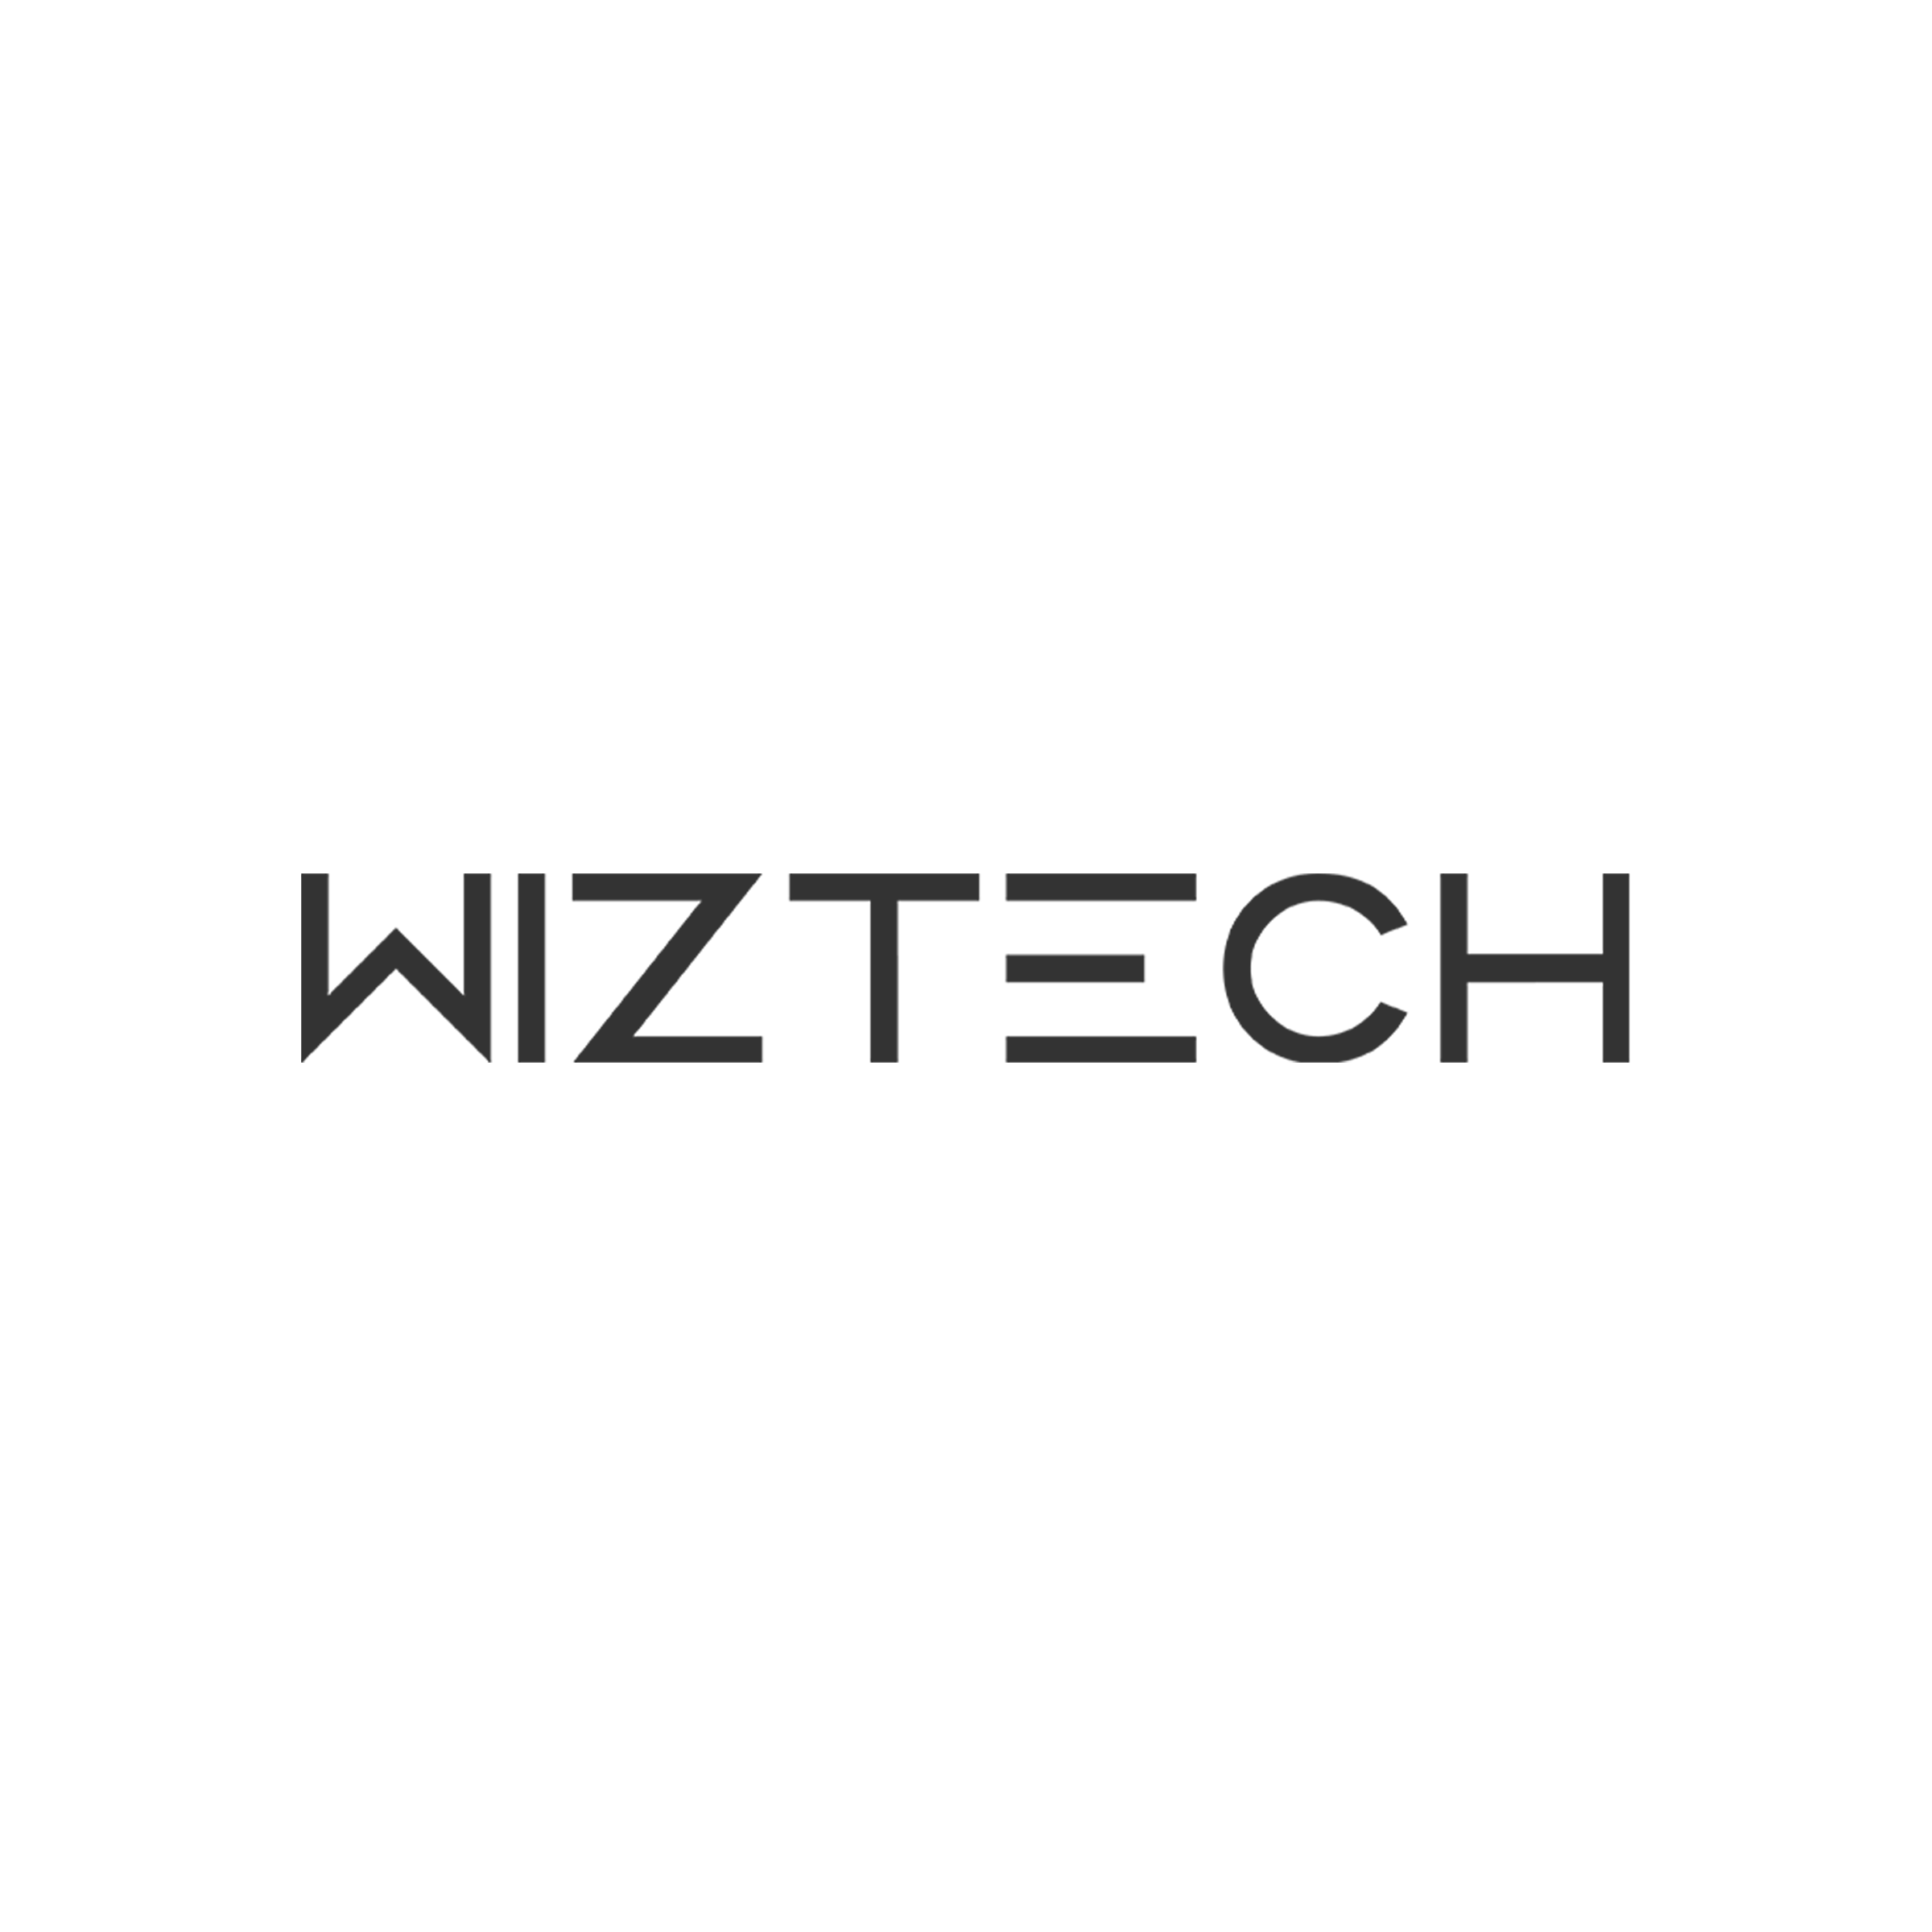 Company logo for Wiz Technologies (s) Pte. Ltd.